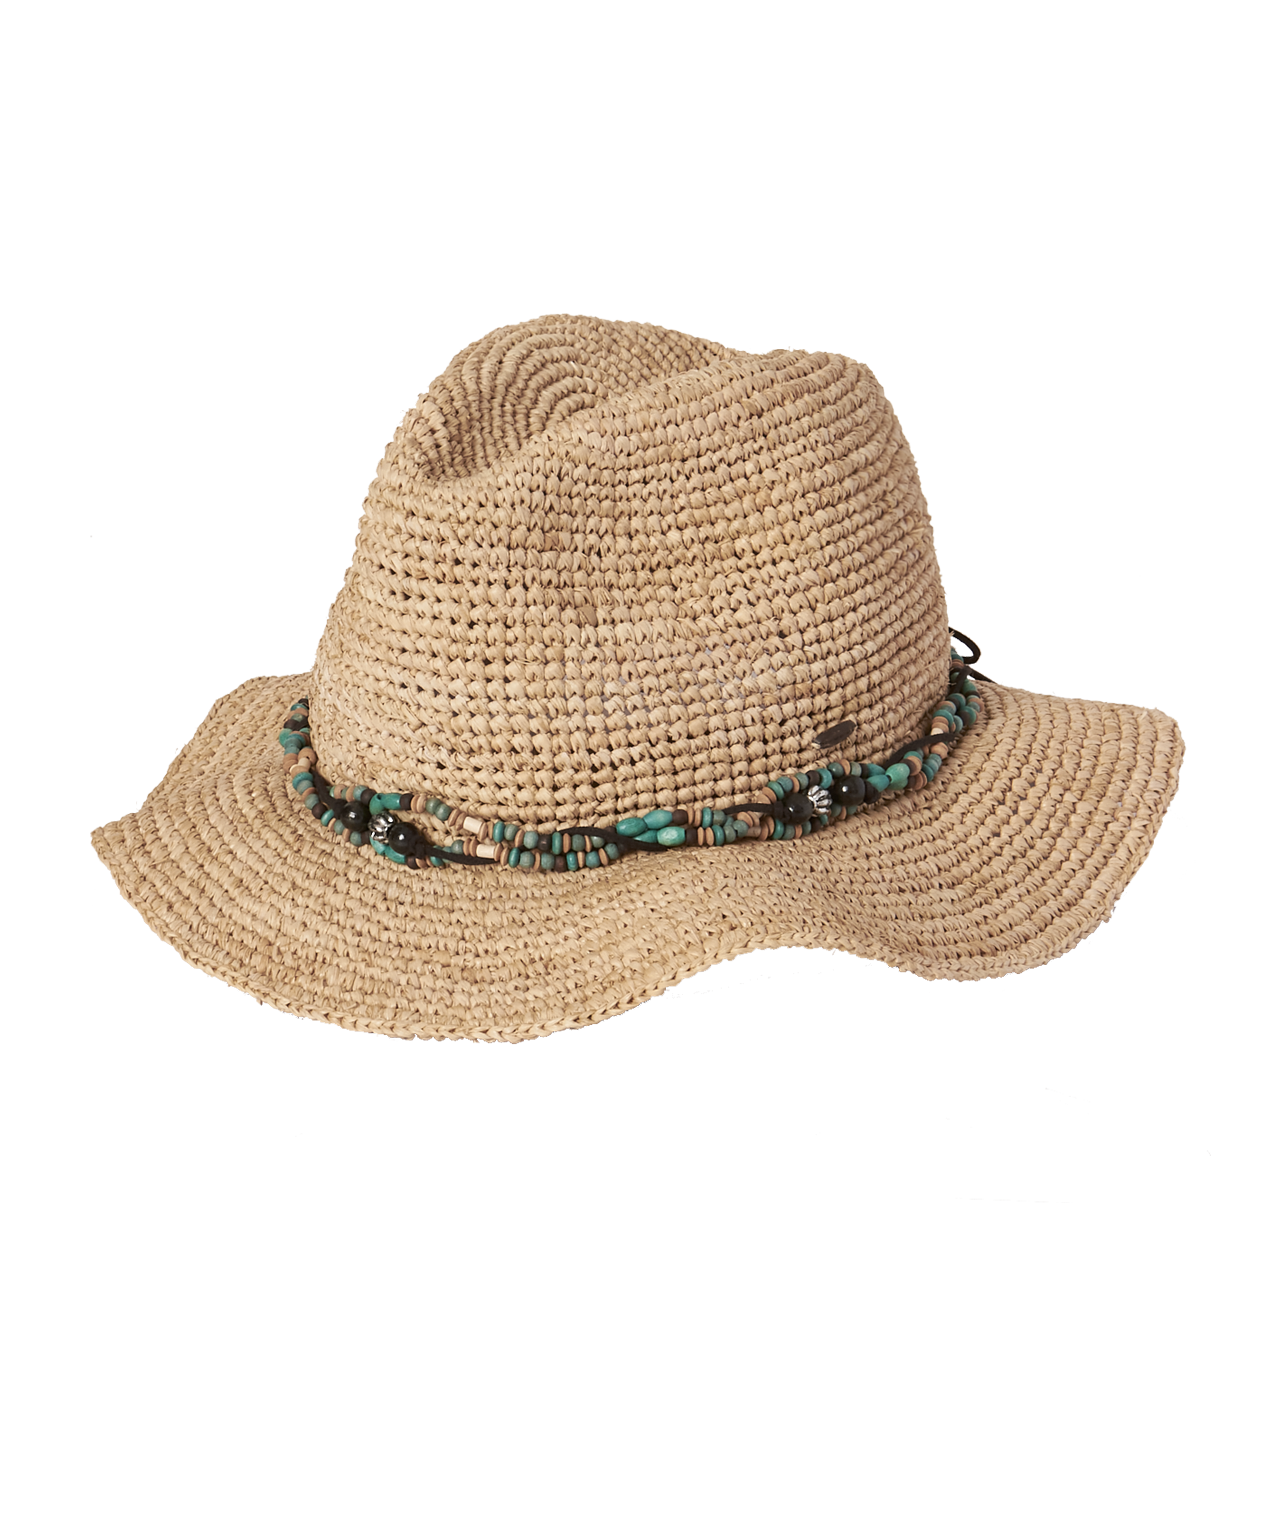 Kooringal Mimosa Safari Hat - Women's Natural / Black One Size